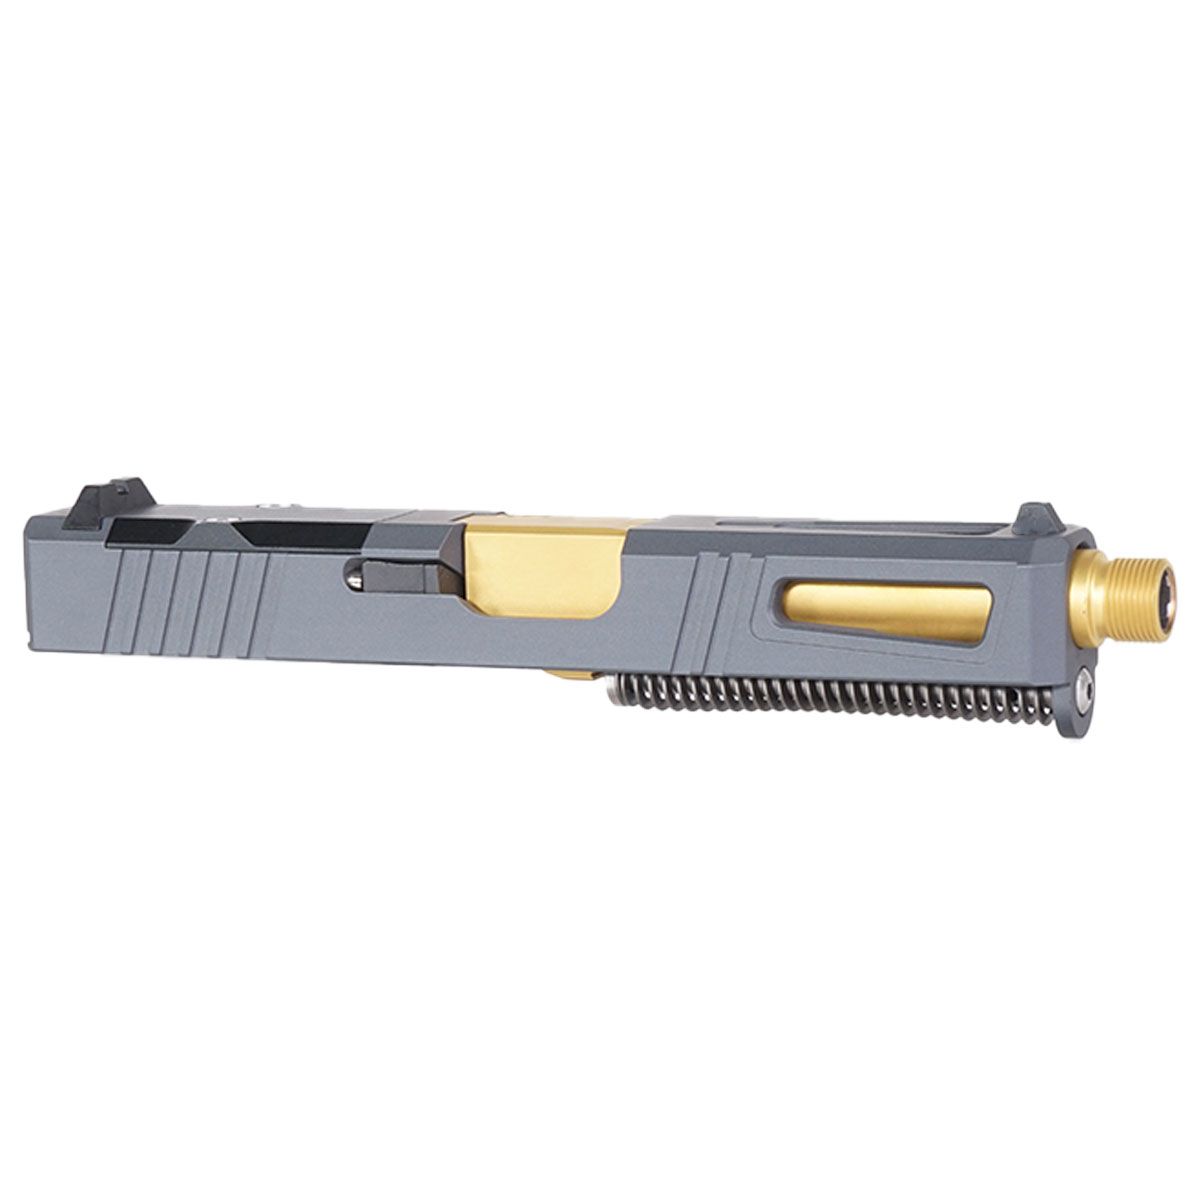 MMC 'Gold Strike-Suppressor Ready' 9mm Complete Slide Kit - Glock 19 Gen 1-3 Compatible